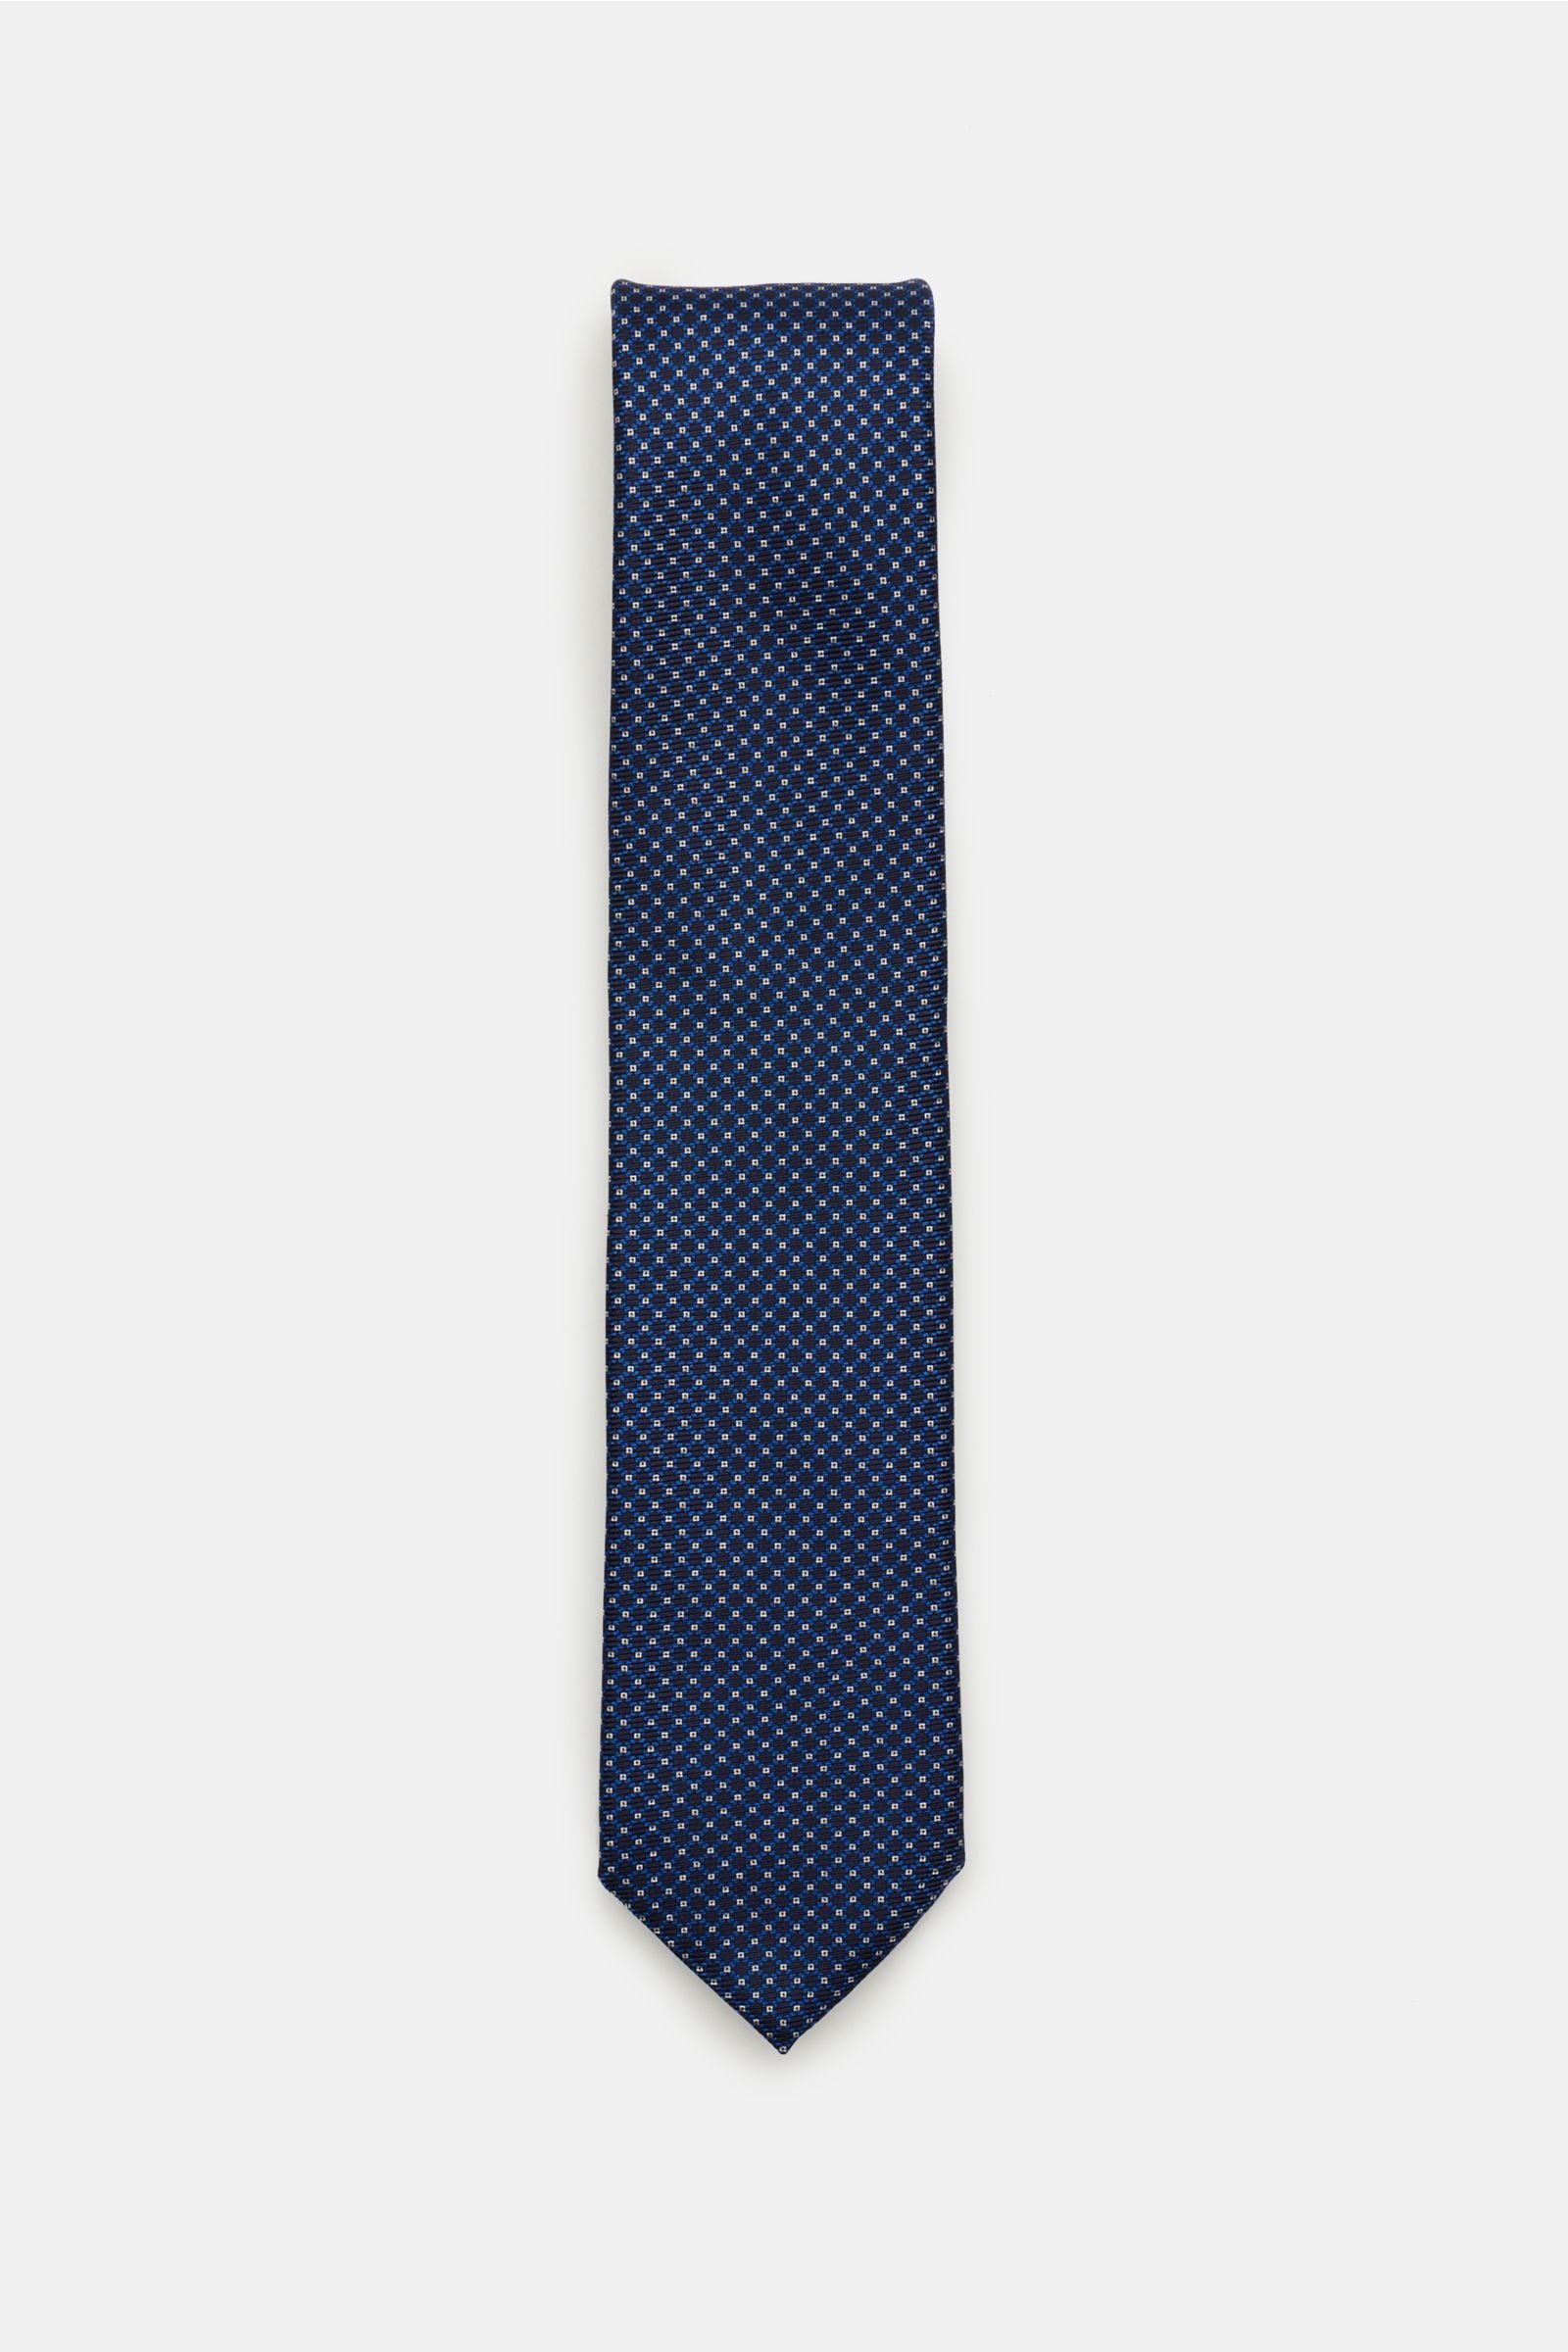 Silk tie navy/blue patterned